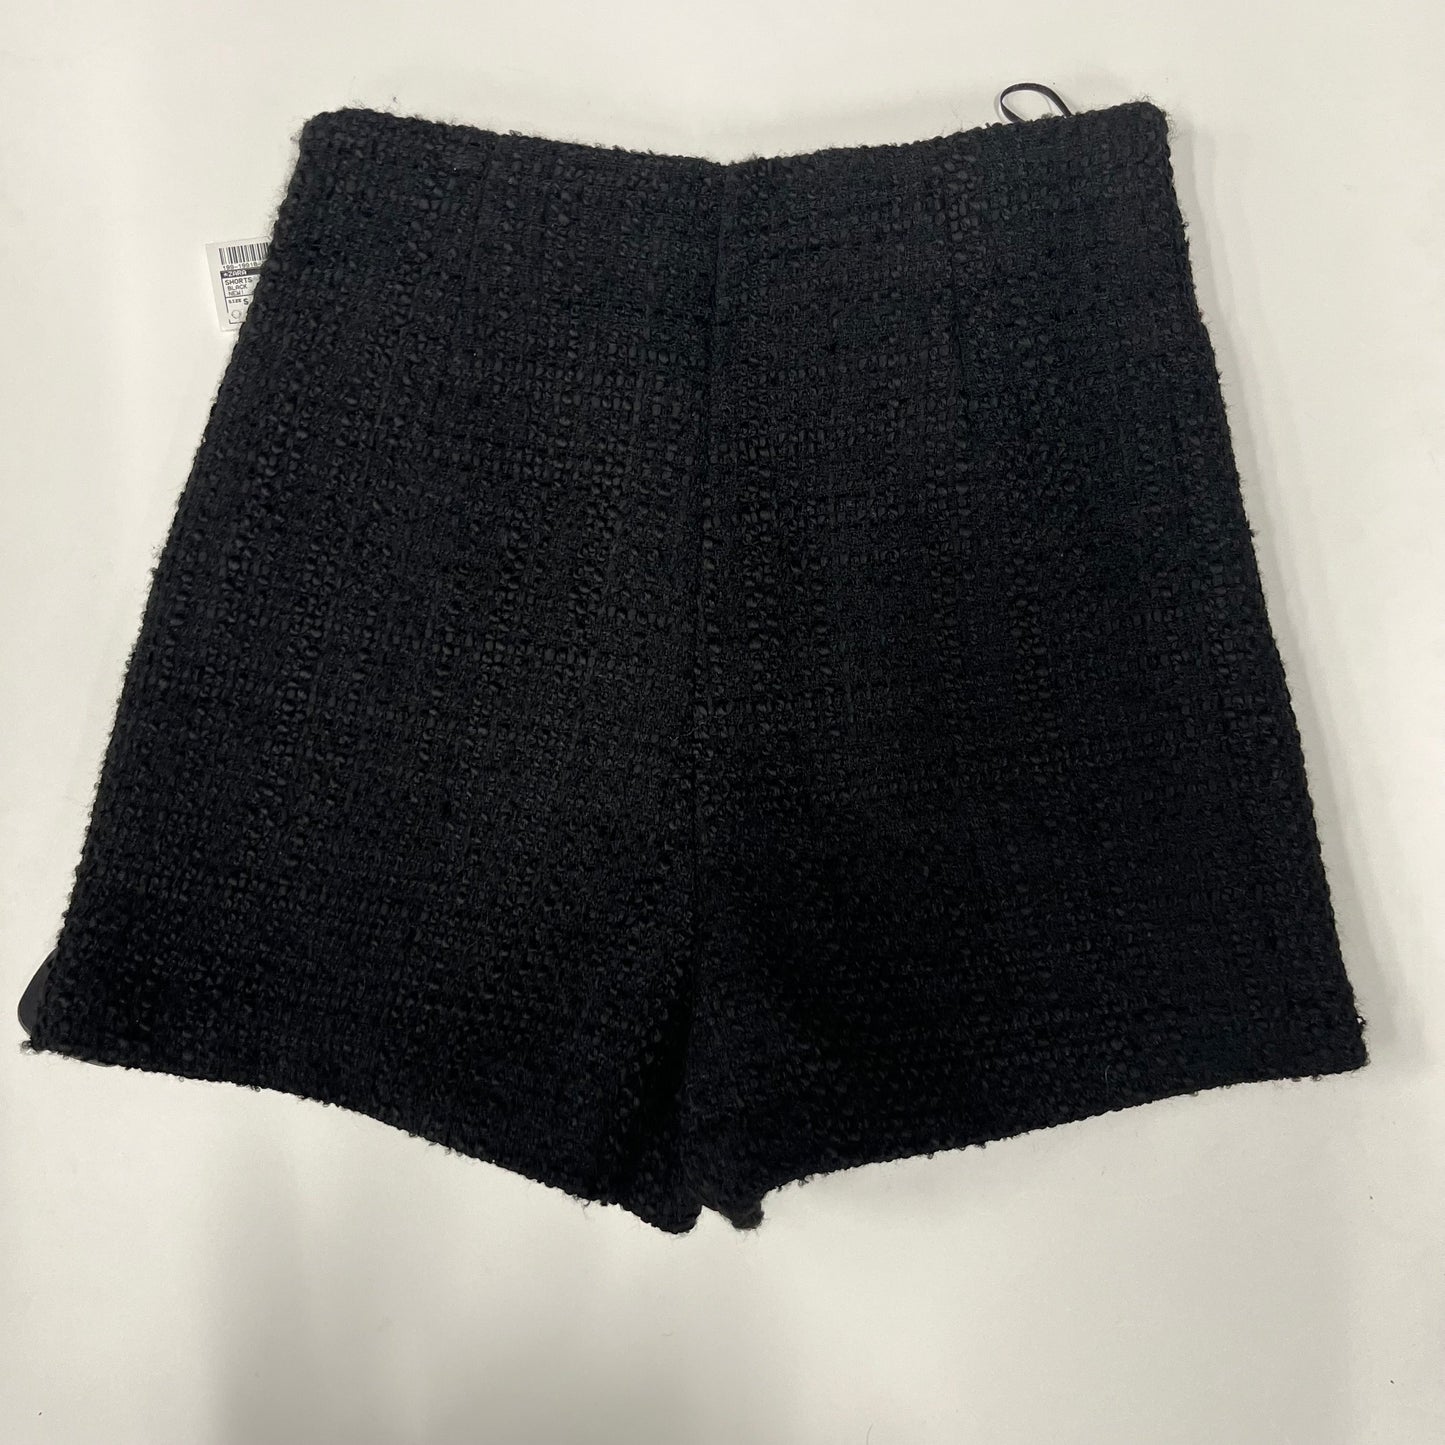 Shorts By Zara NWT  Size: S